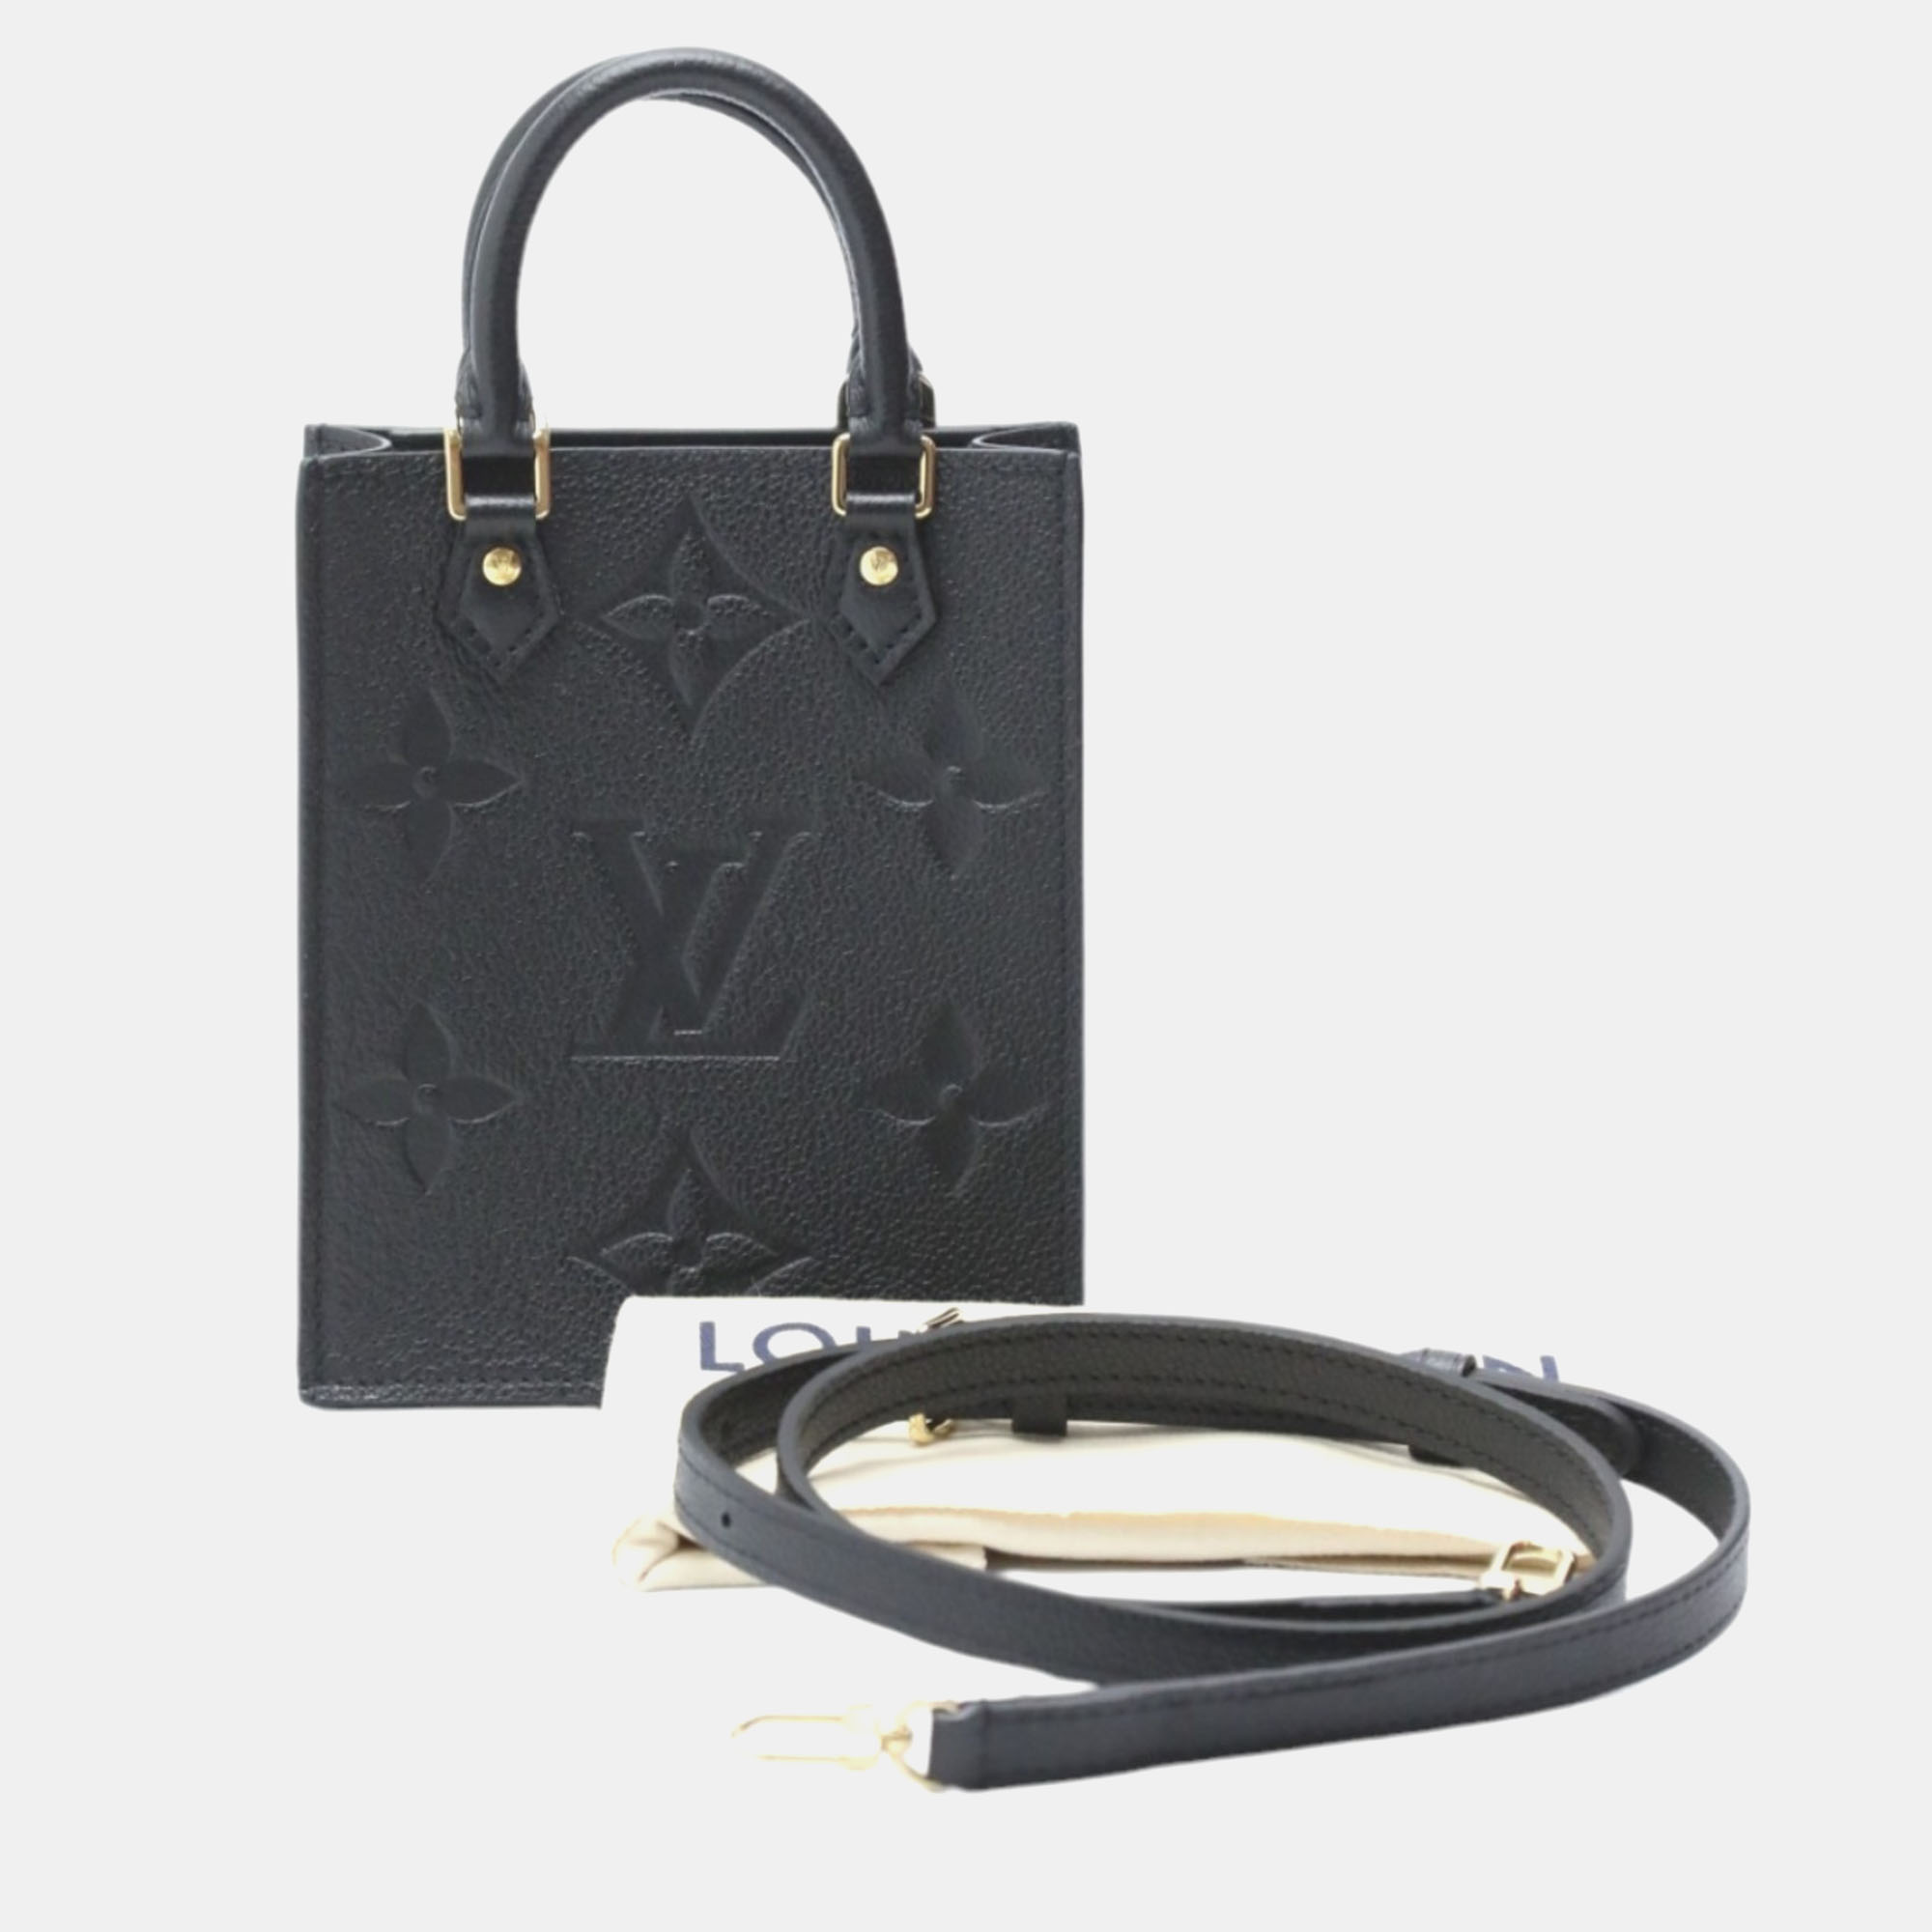 

Louis Vuitton Black Leather Petite Sac Plat Tote Bag